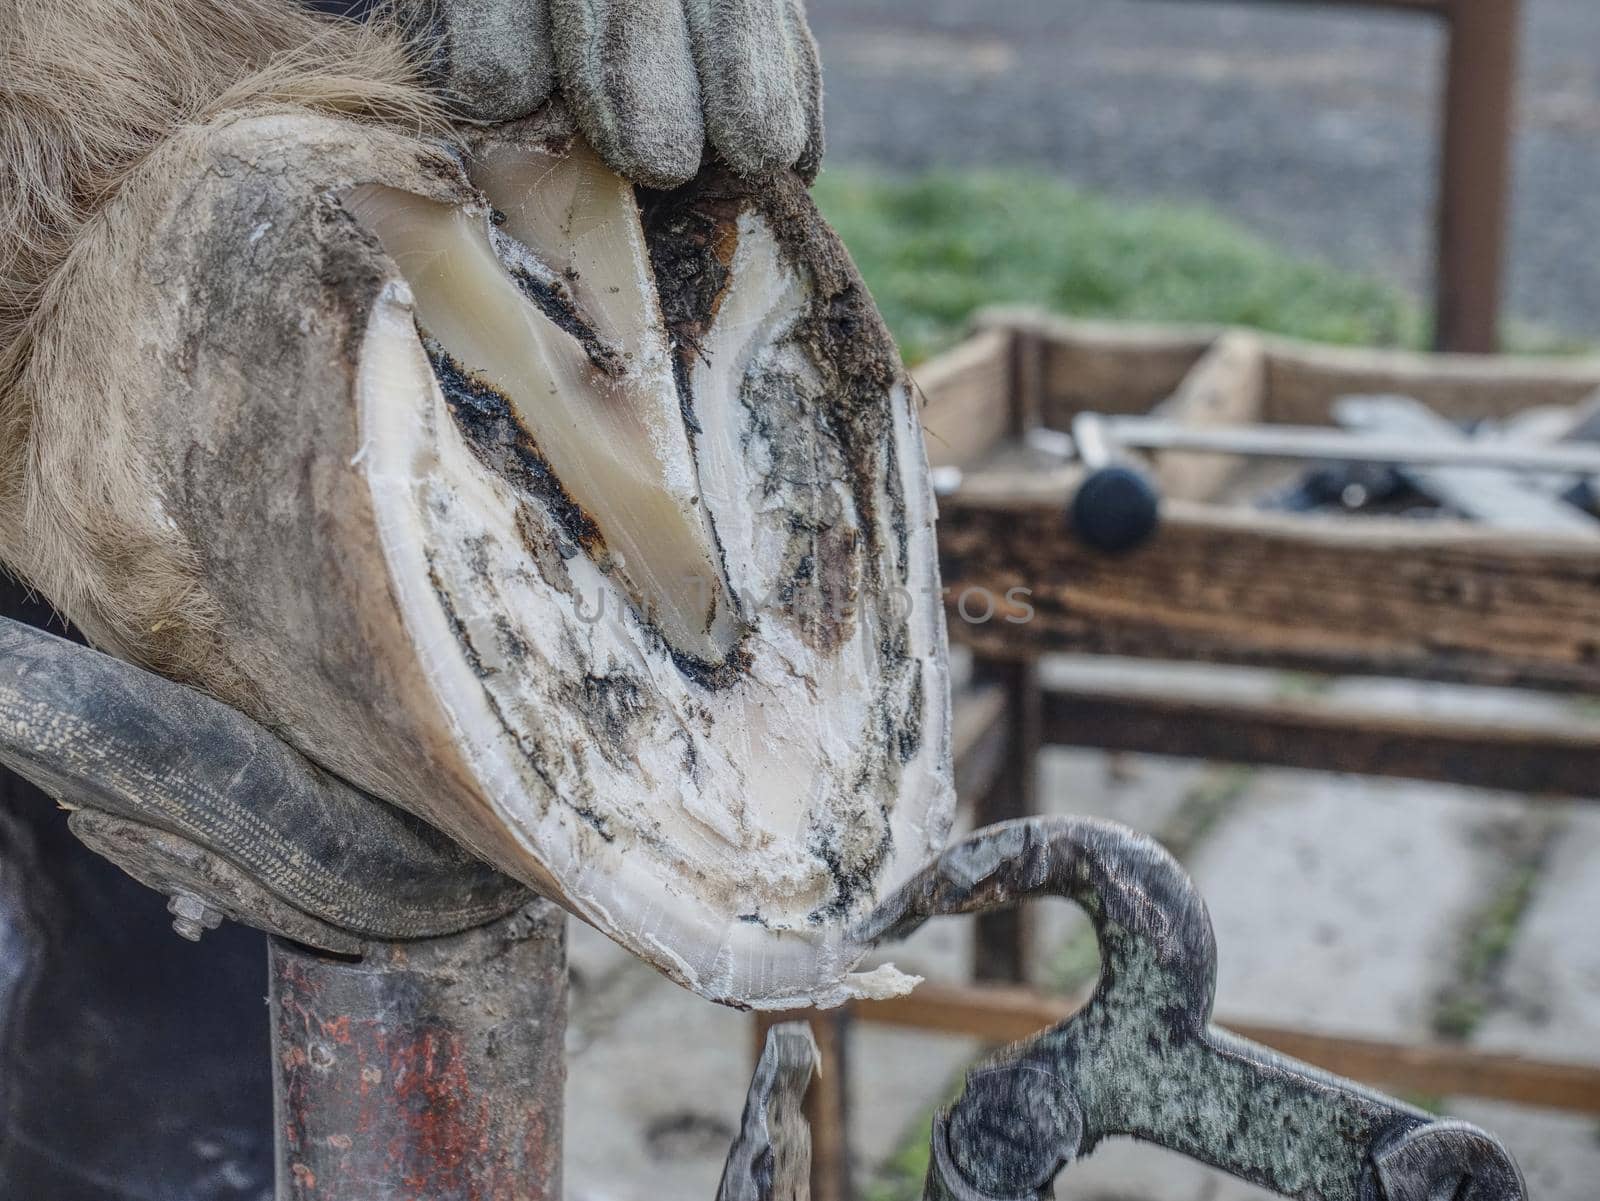 Adjust of worn and overgrown horse hooves. Detail of blacksmith tools in work on hoof.